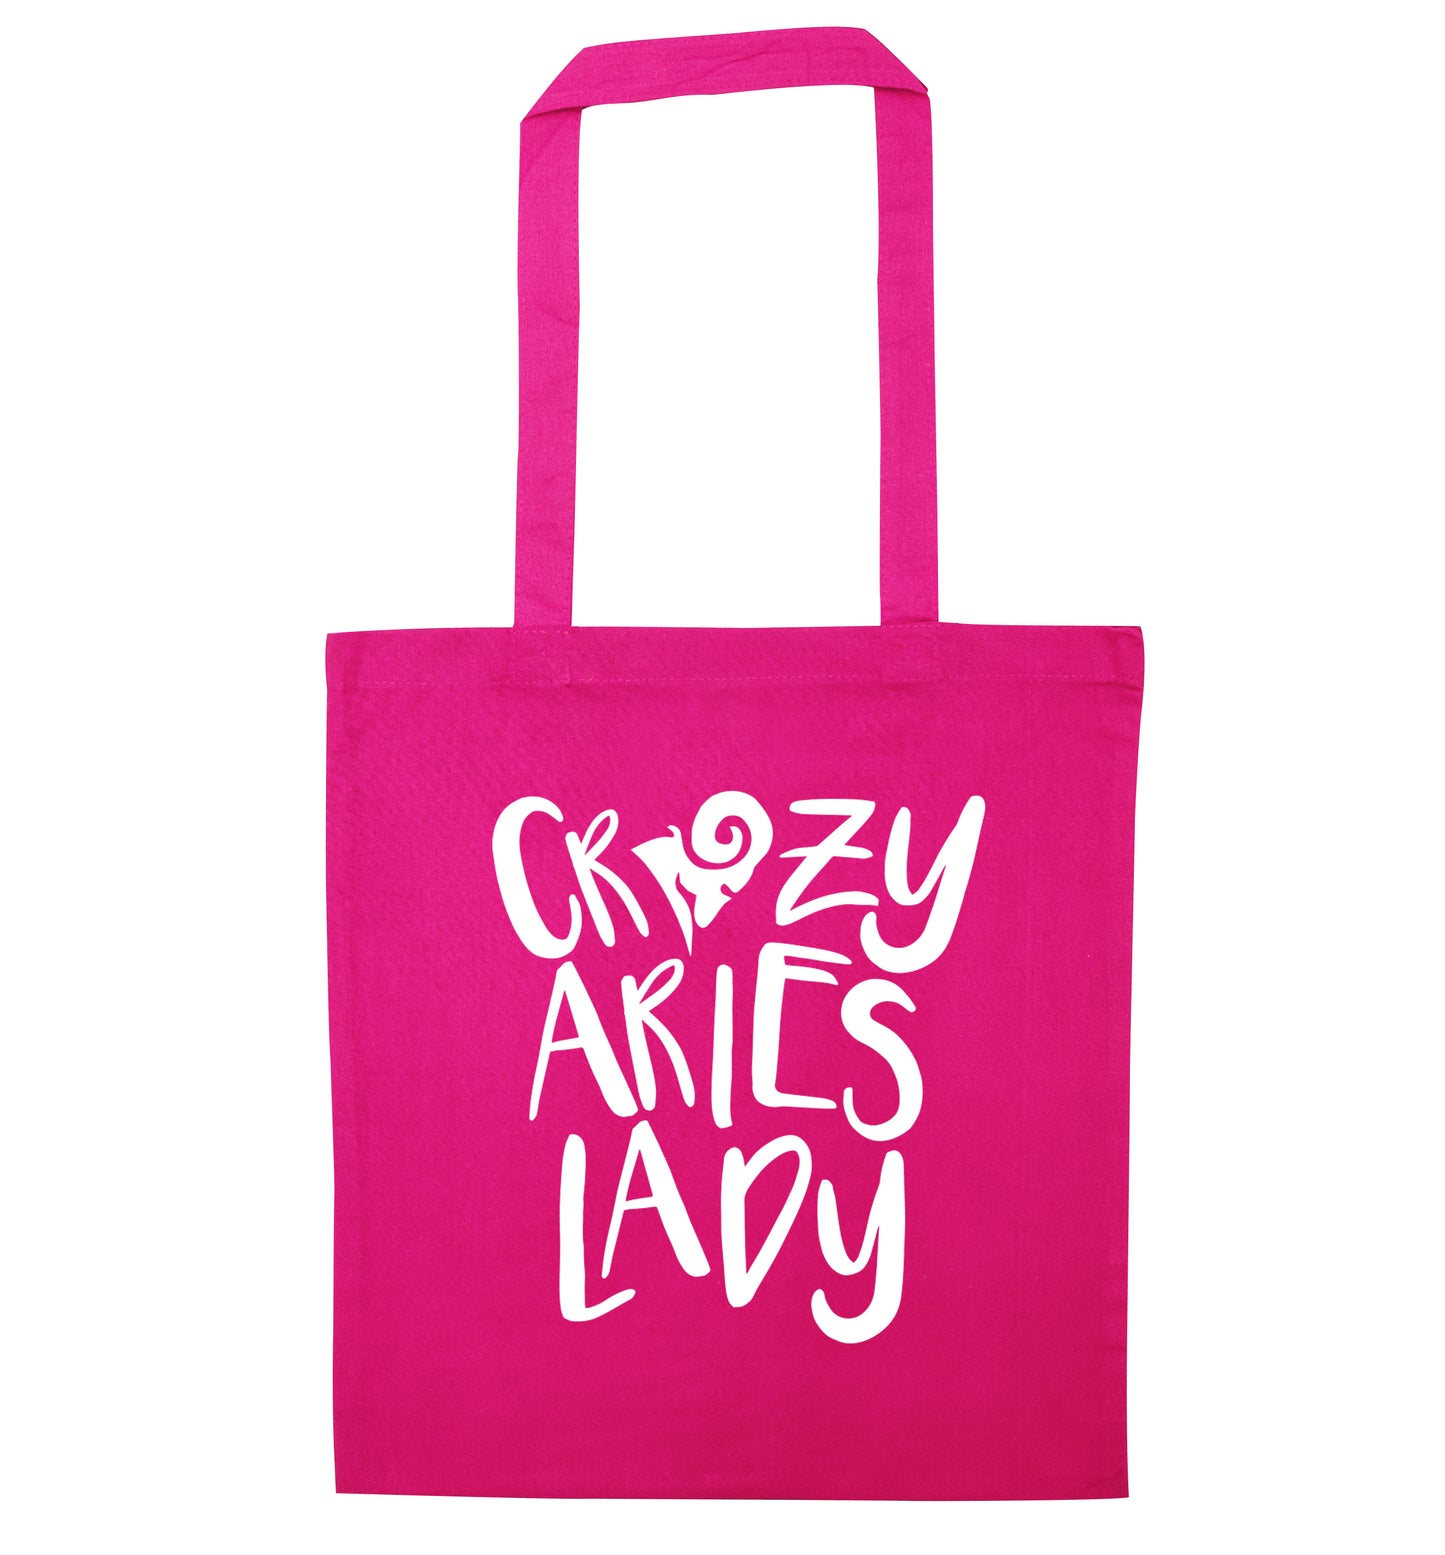 Crazy aries lady pink tote bag